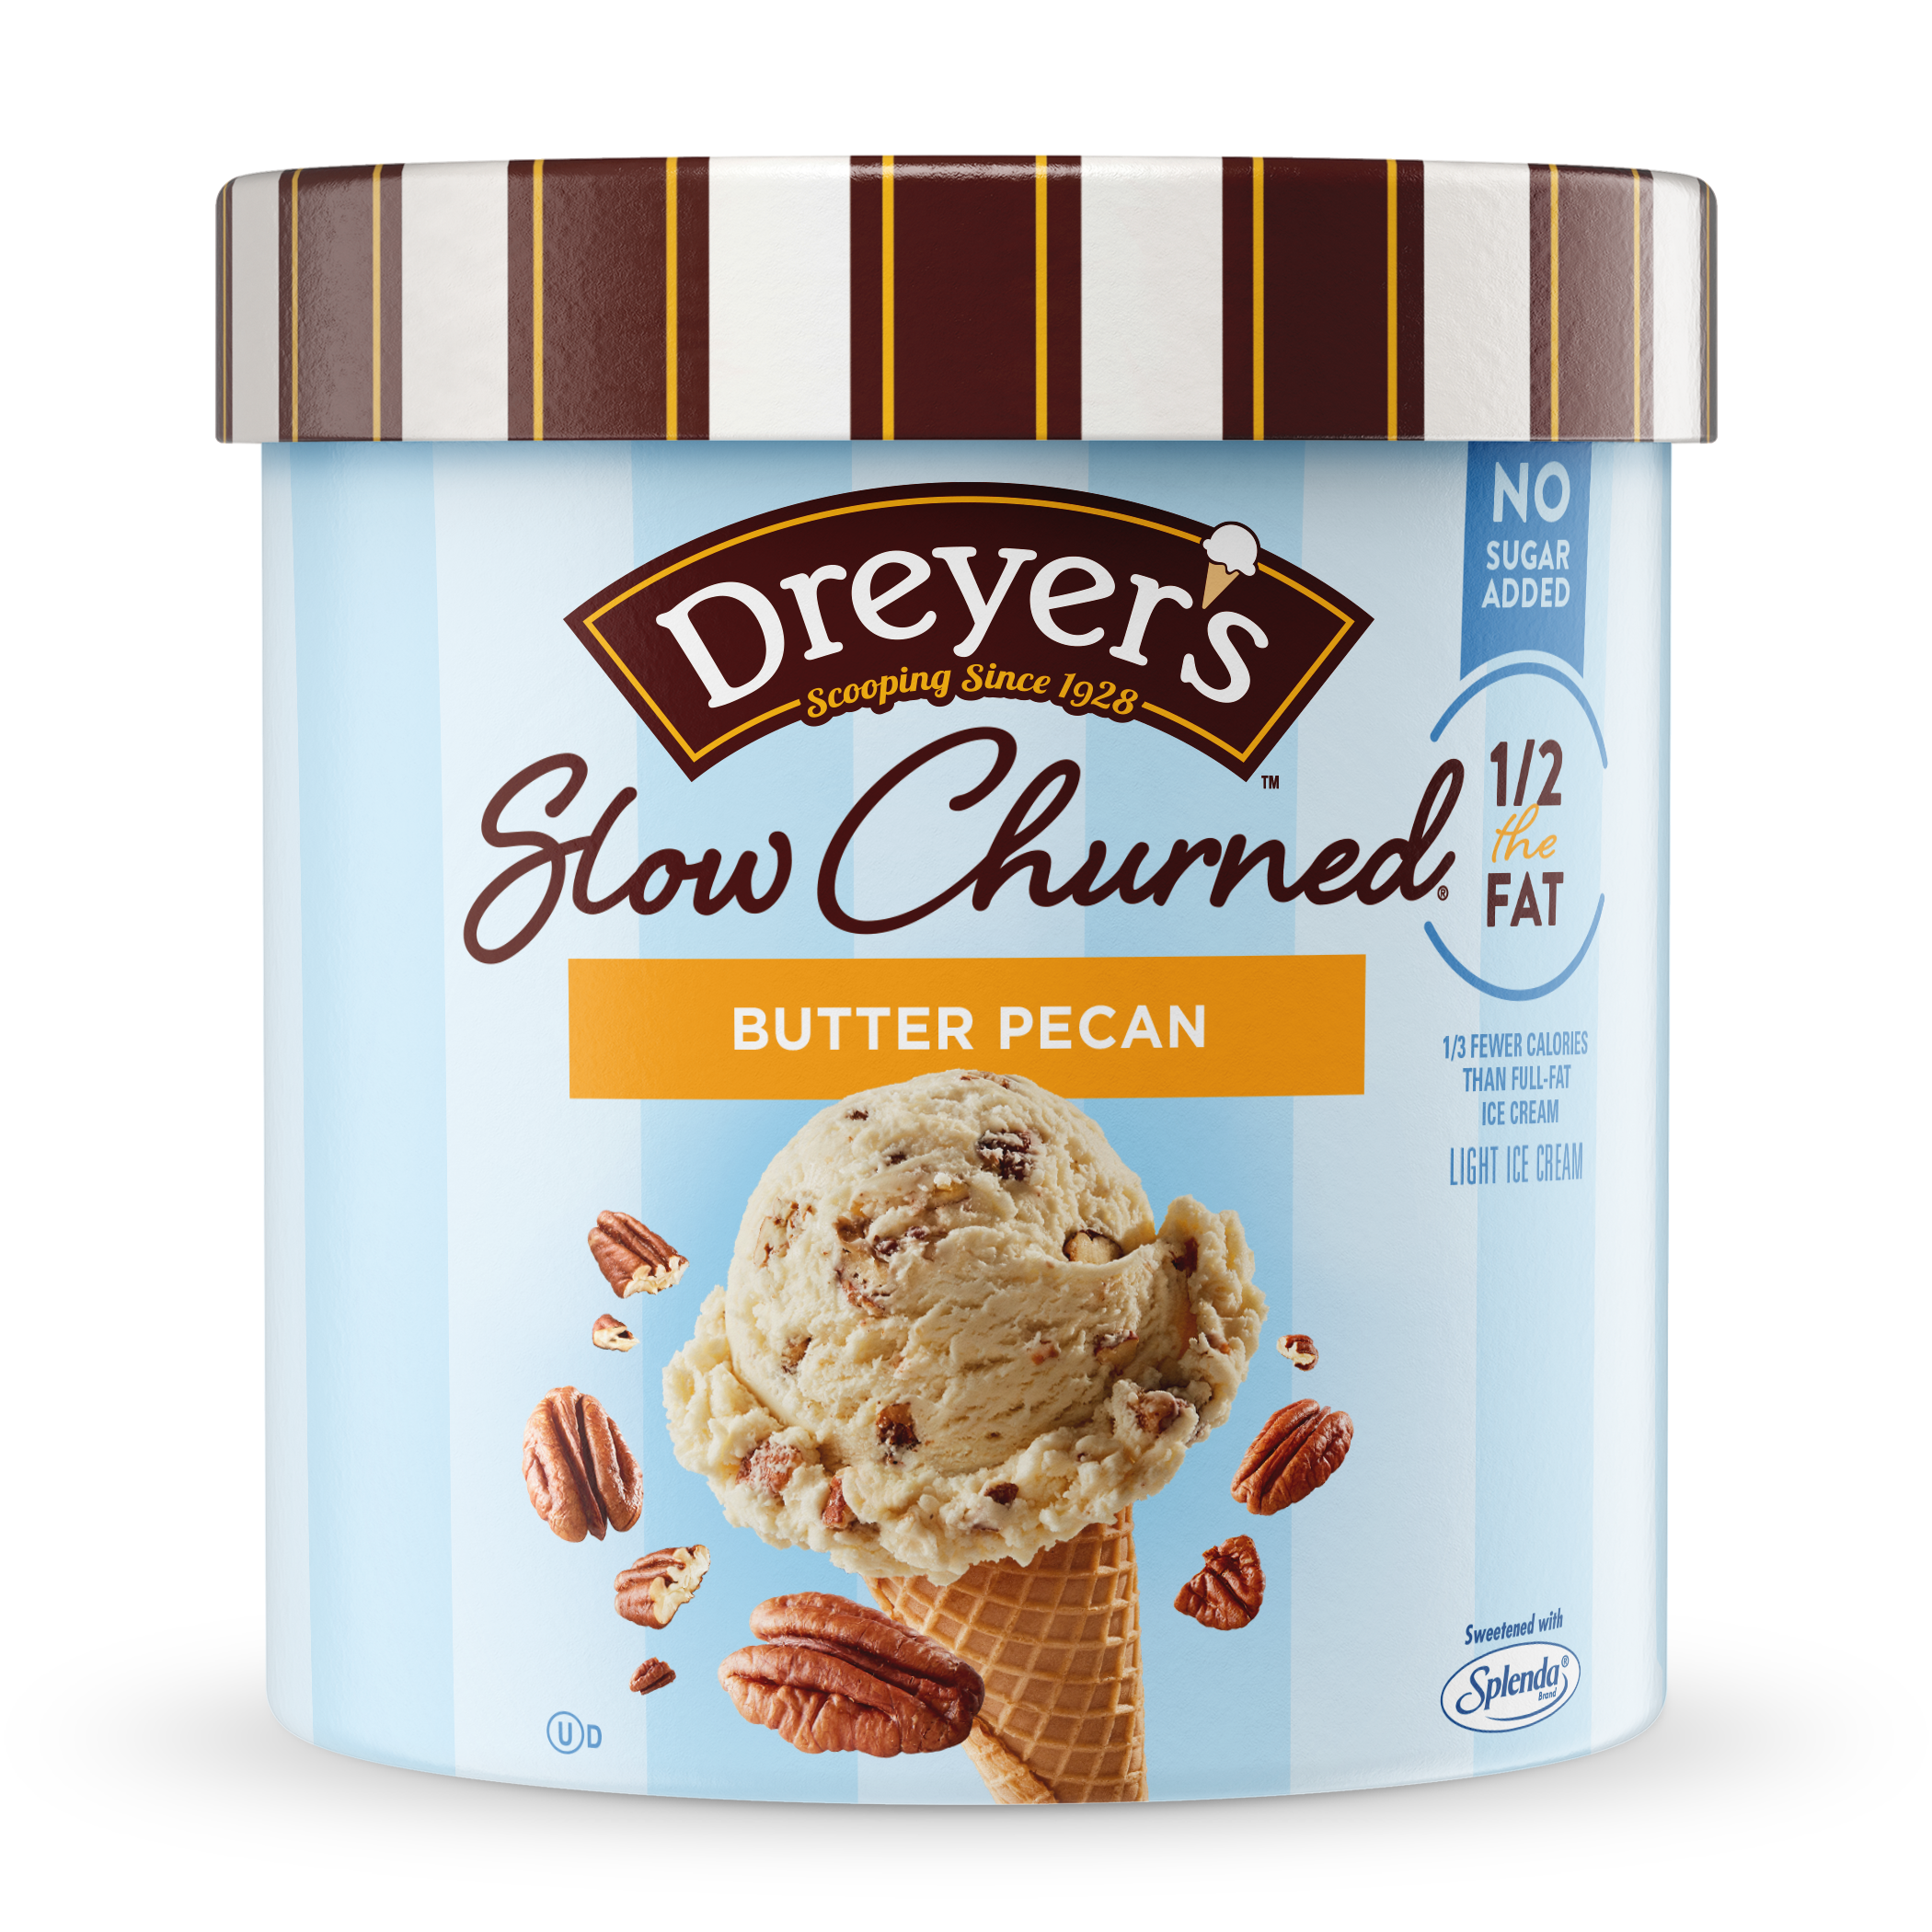 Carton of Dreyer's no sugar added butter pecan ice cream